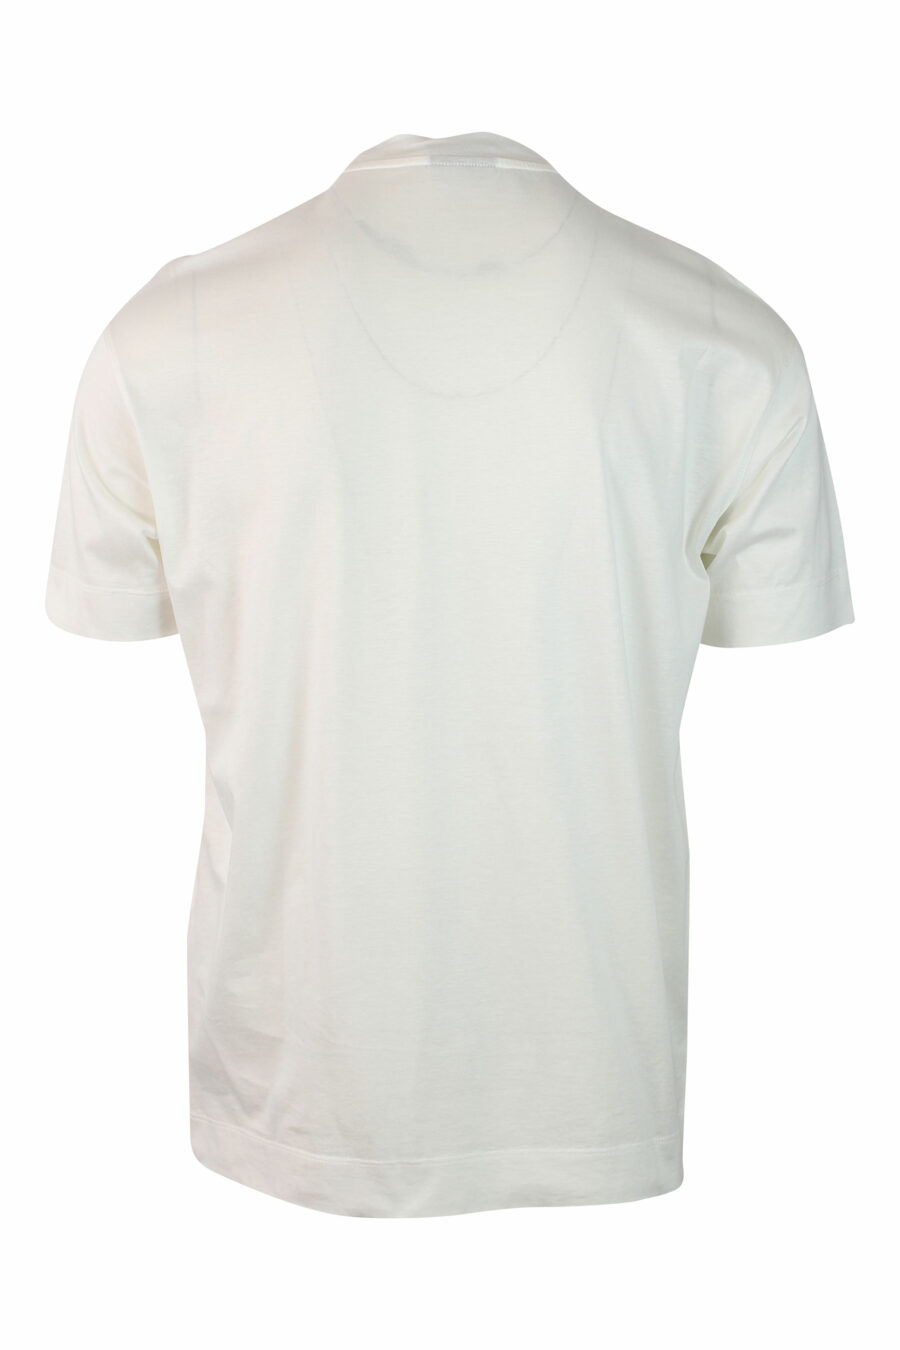 White T-shirt with degradé eagle maxilogo - IMG 0138